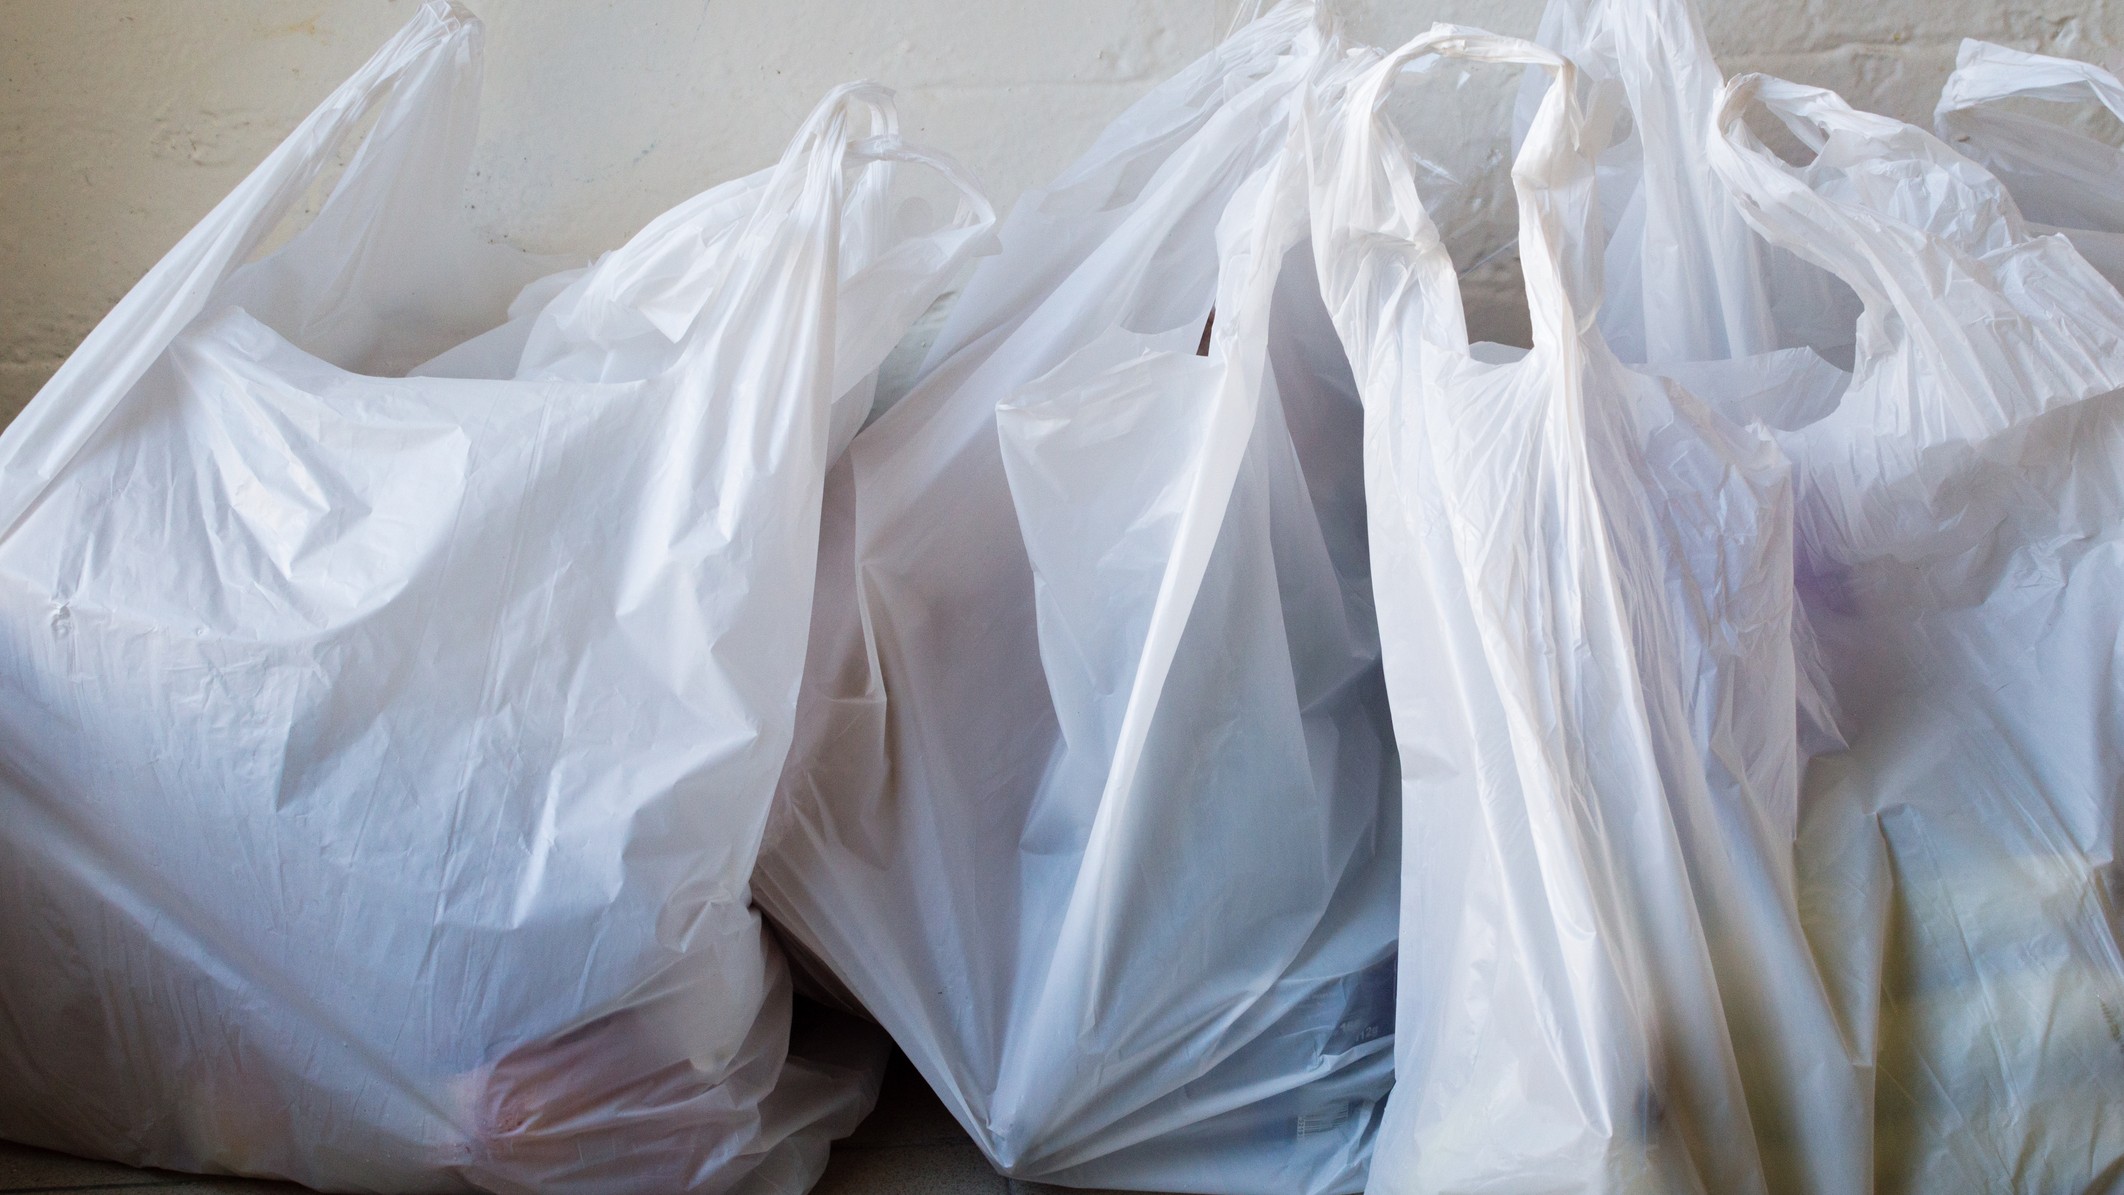 https://media.nbcphiladelphia.com/2022/04/plastic-bag-plastic-shopping-bag-generic.jpg?quality=85&strip=all